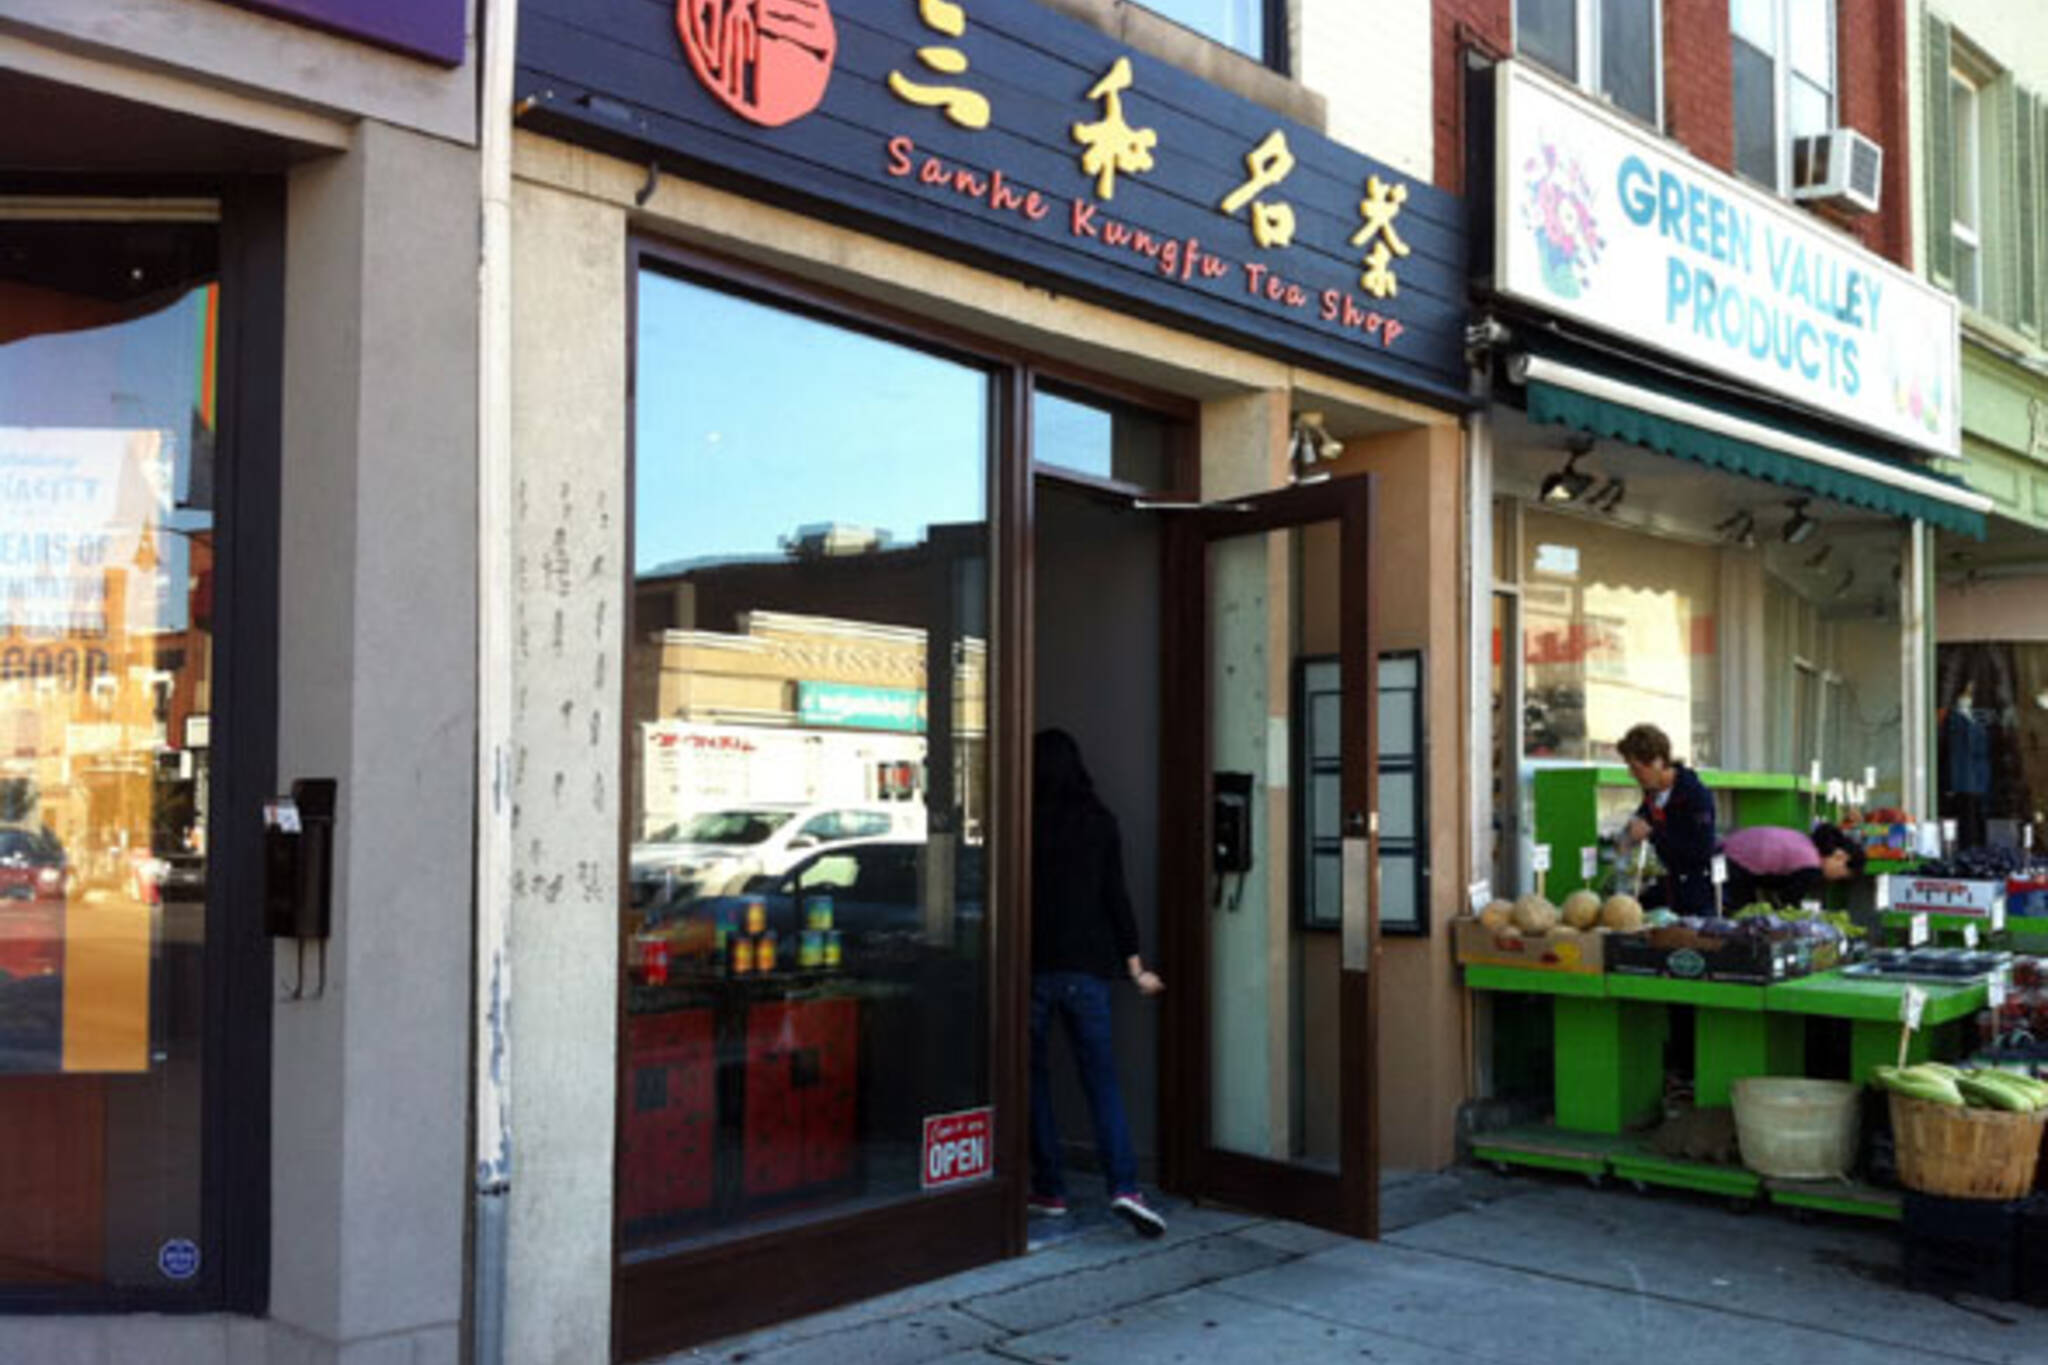 Sanhe Kungfu Tea Shop